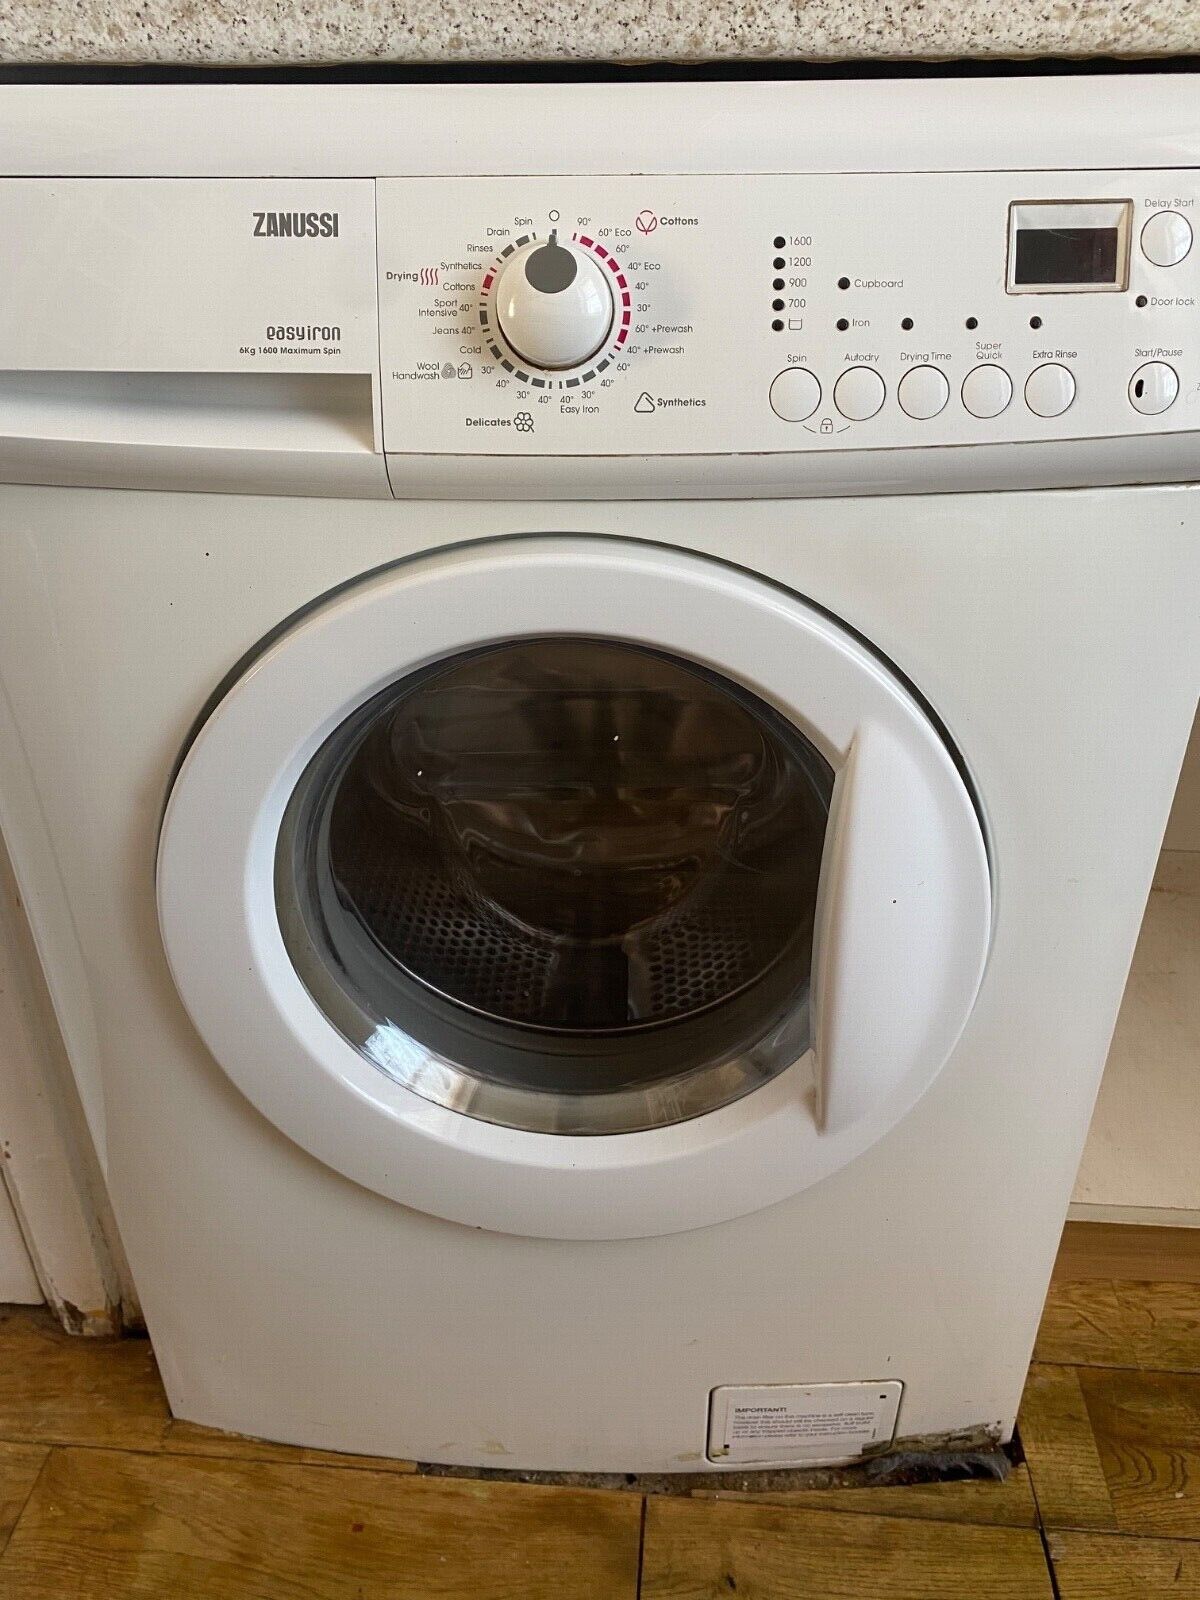 ZANUSSI washing machine, mint condition 